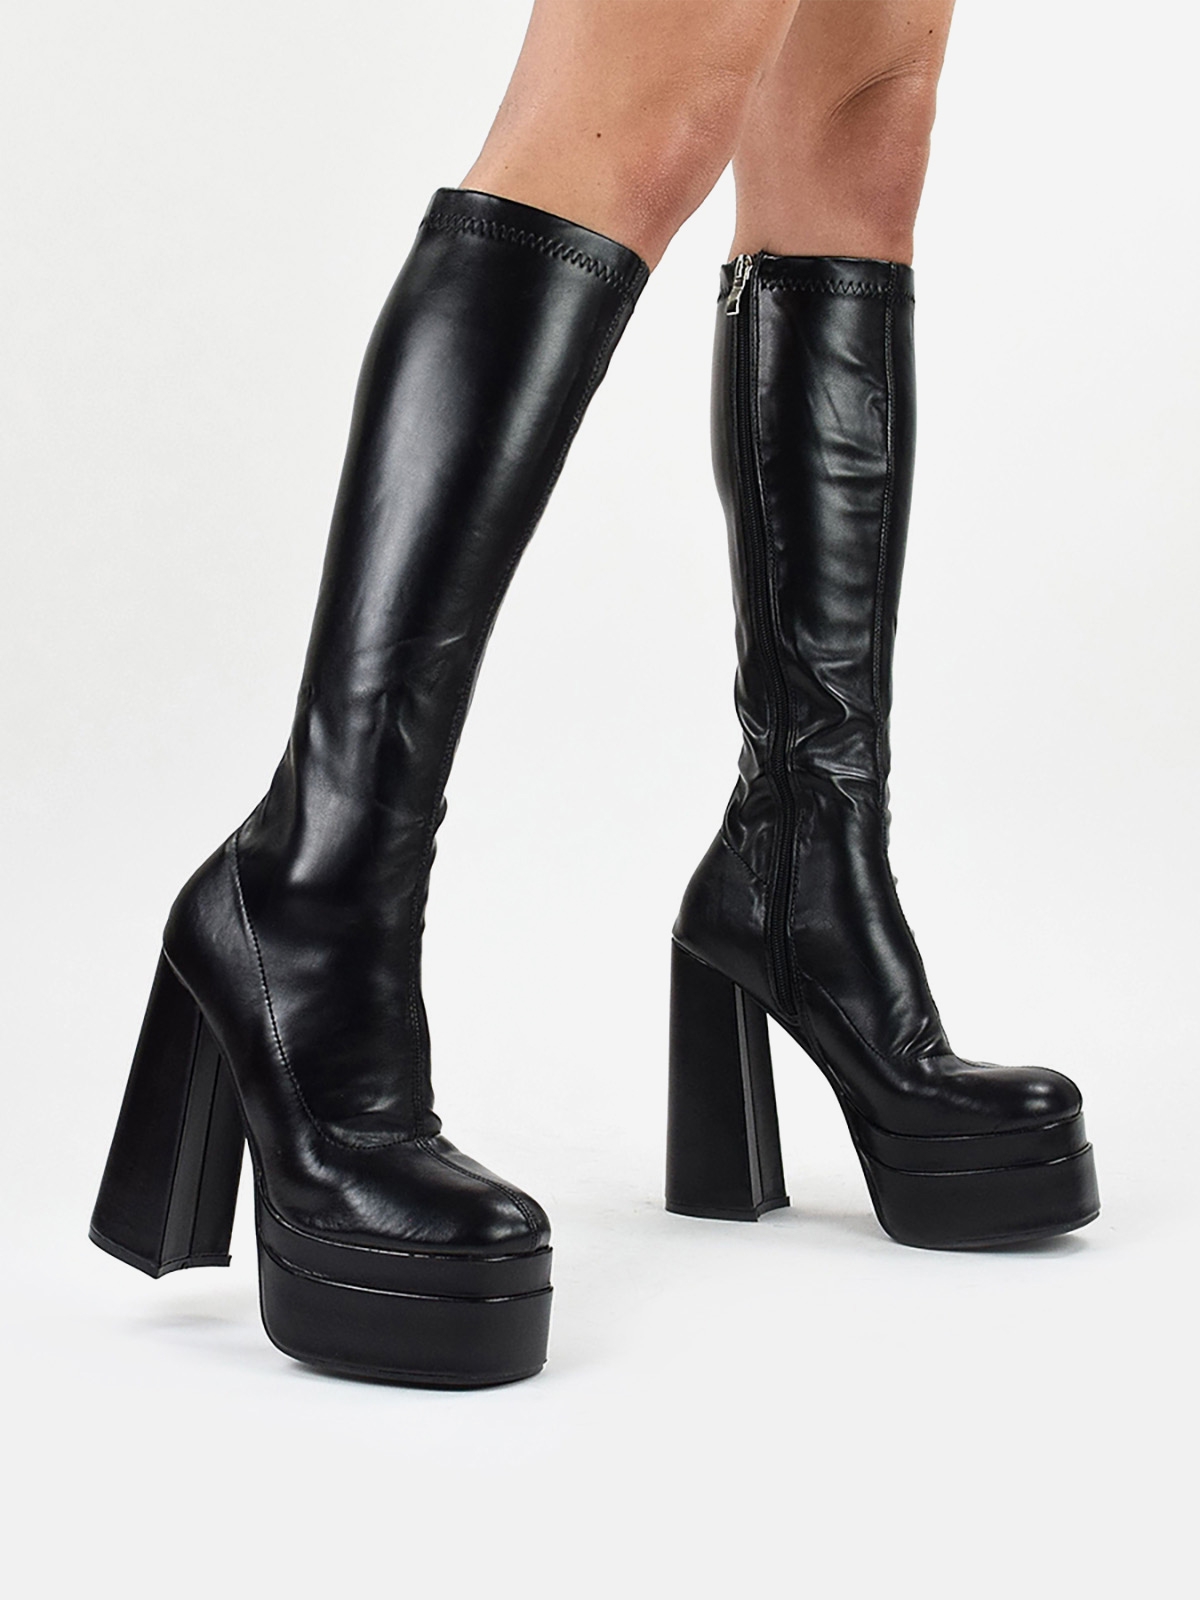 Women's platformed high heeled boots in black